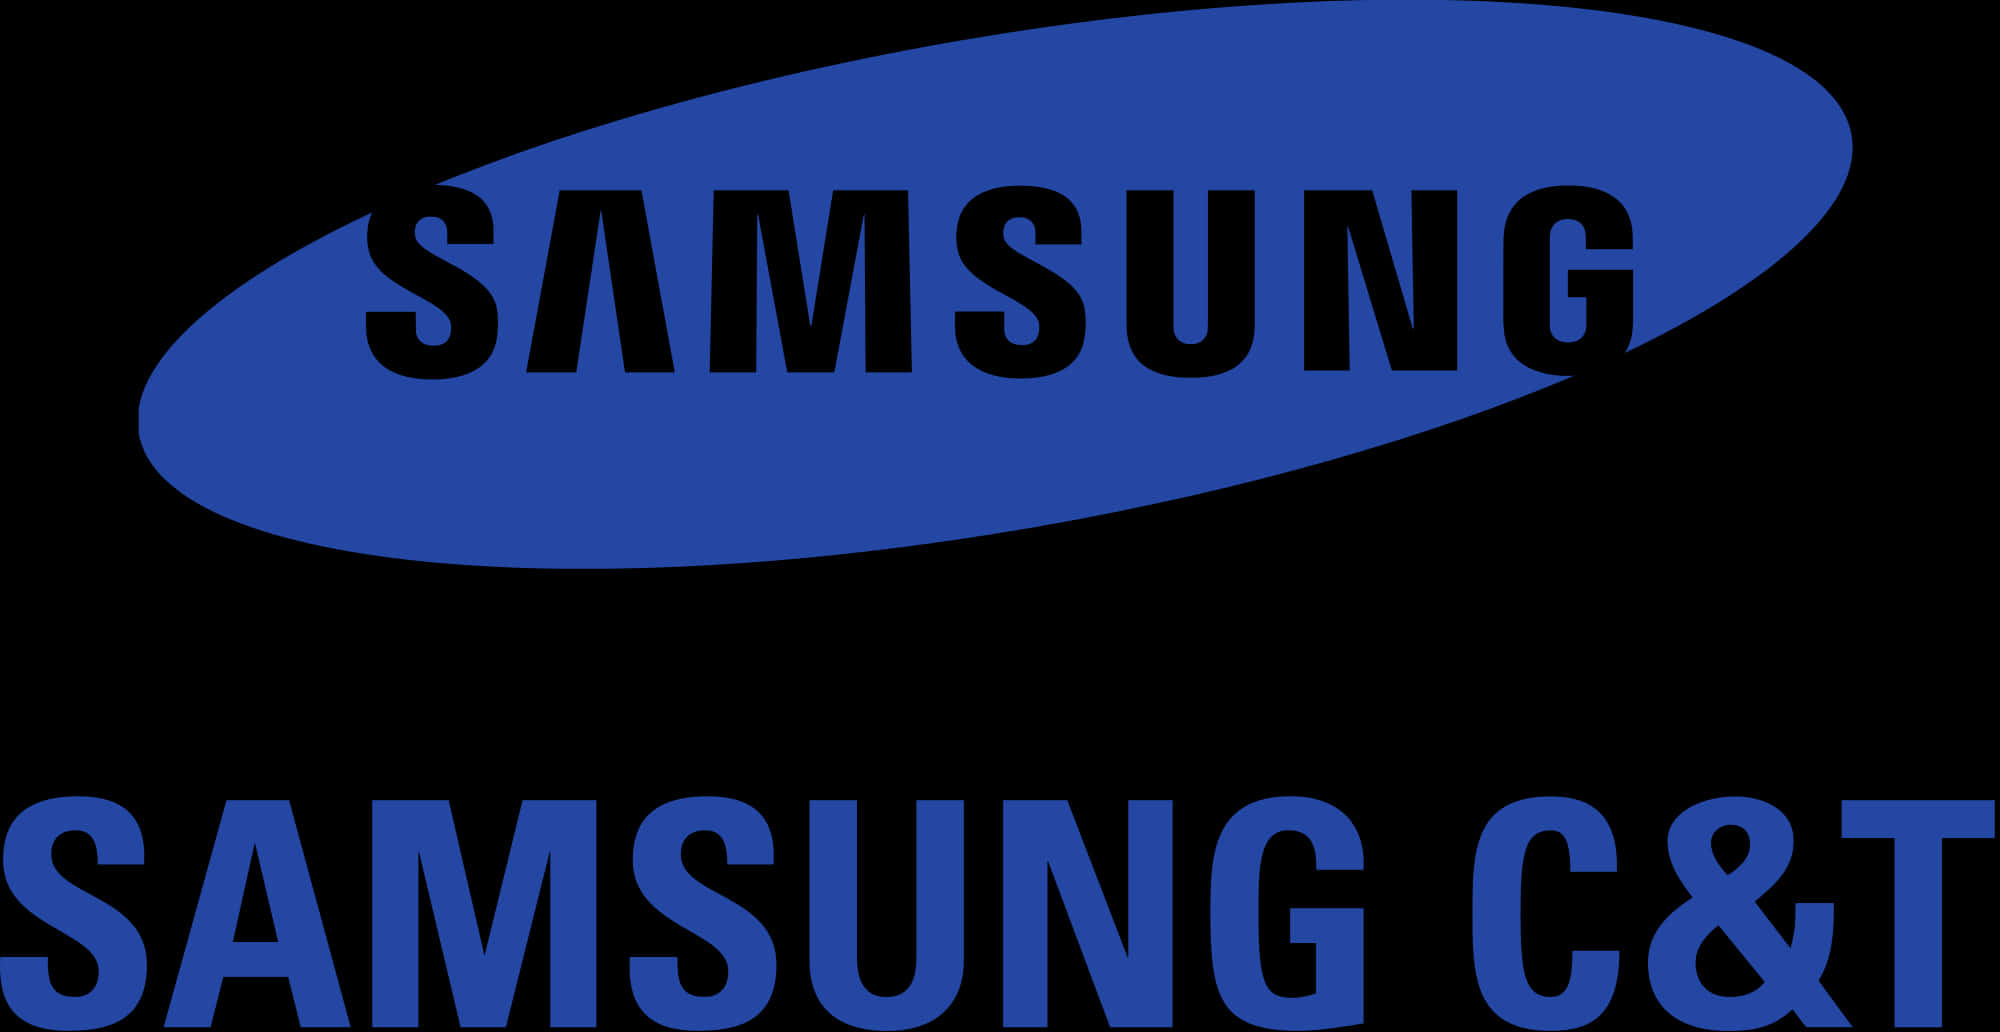 Download Samsung Logos Comparison | Wallpapers.com